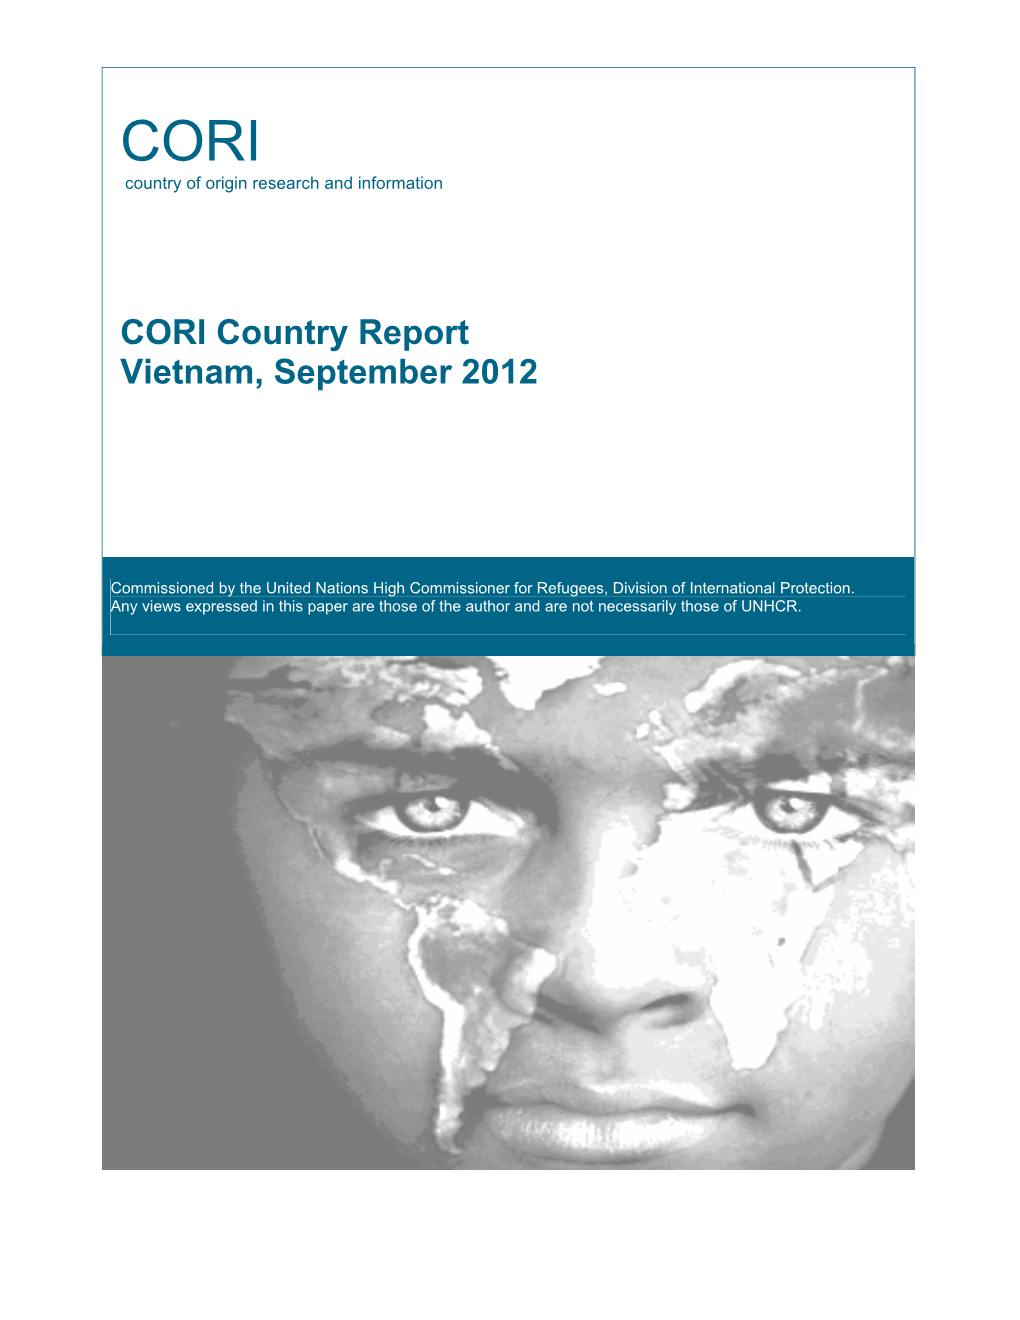 CORI Country Report Vietnam, September 2012